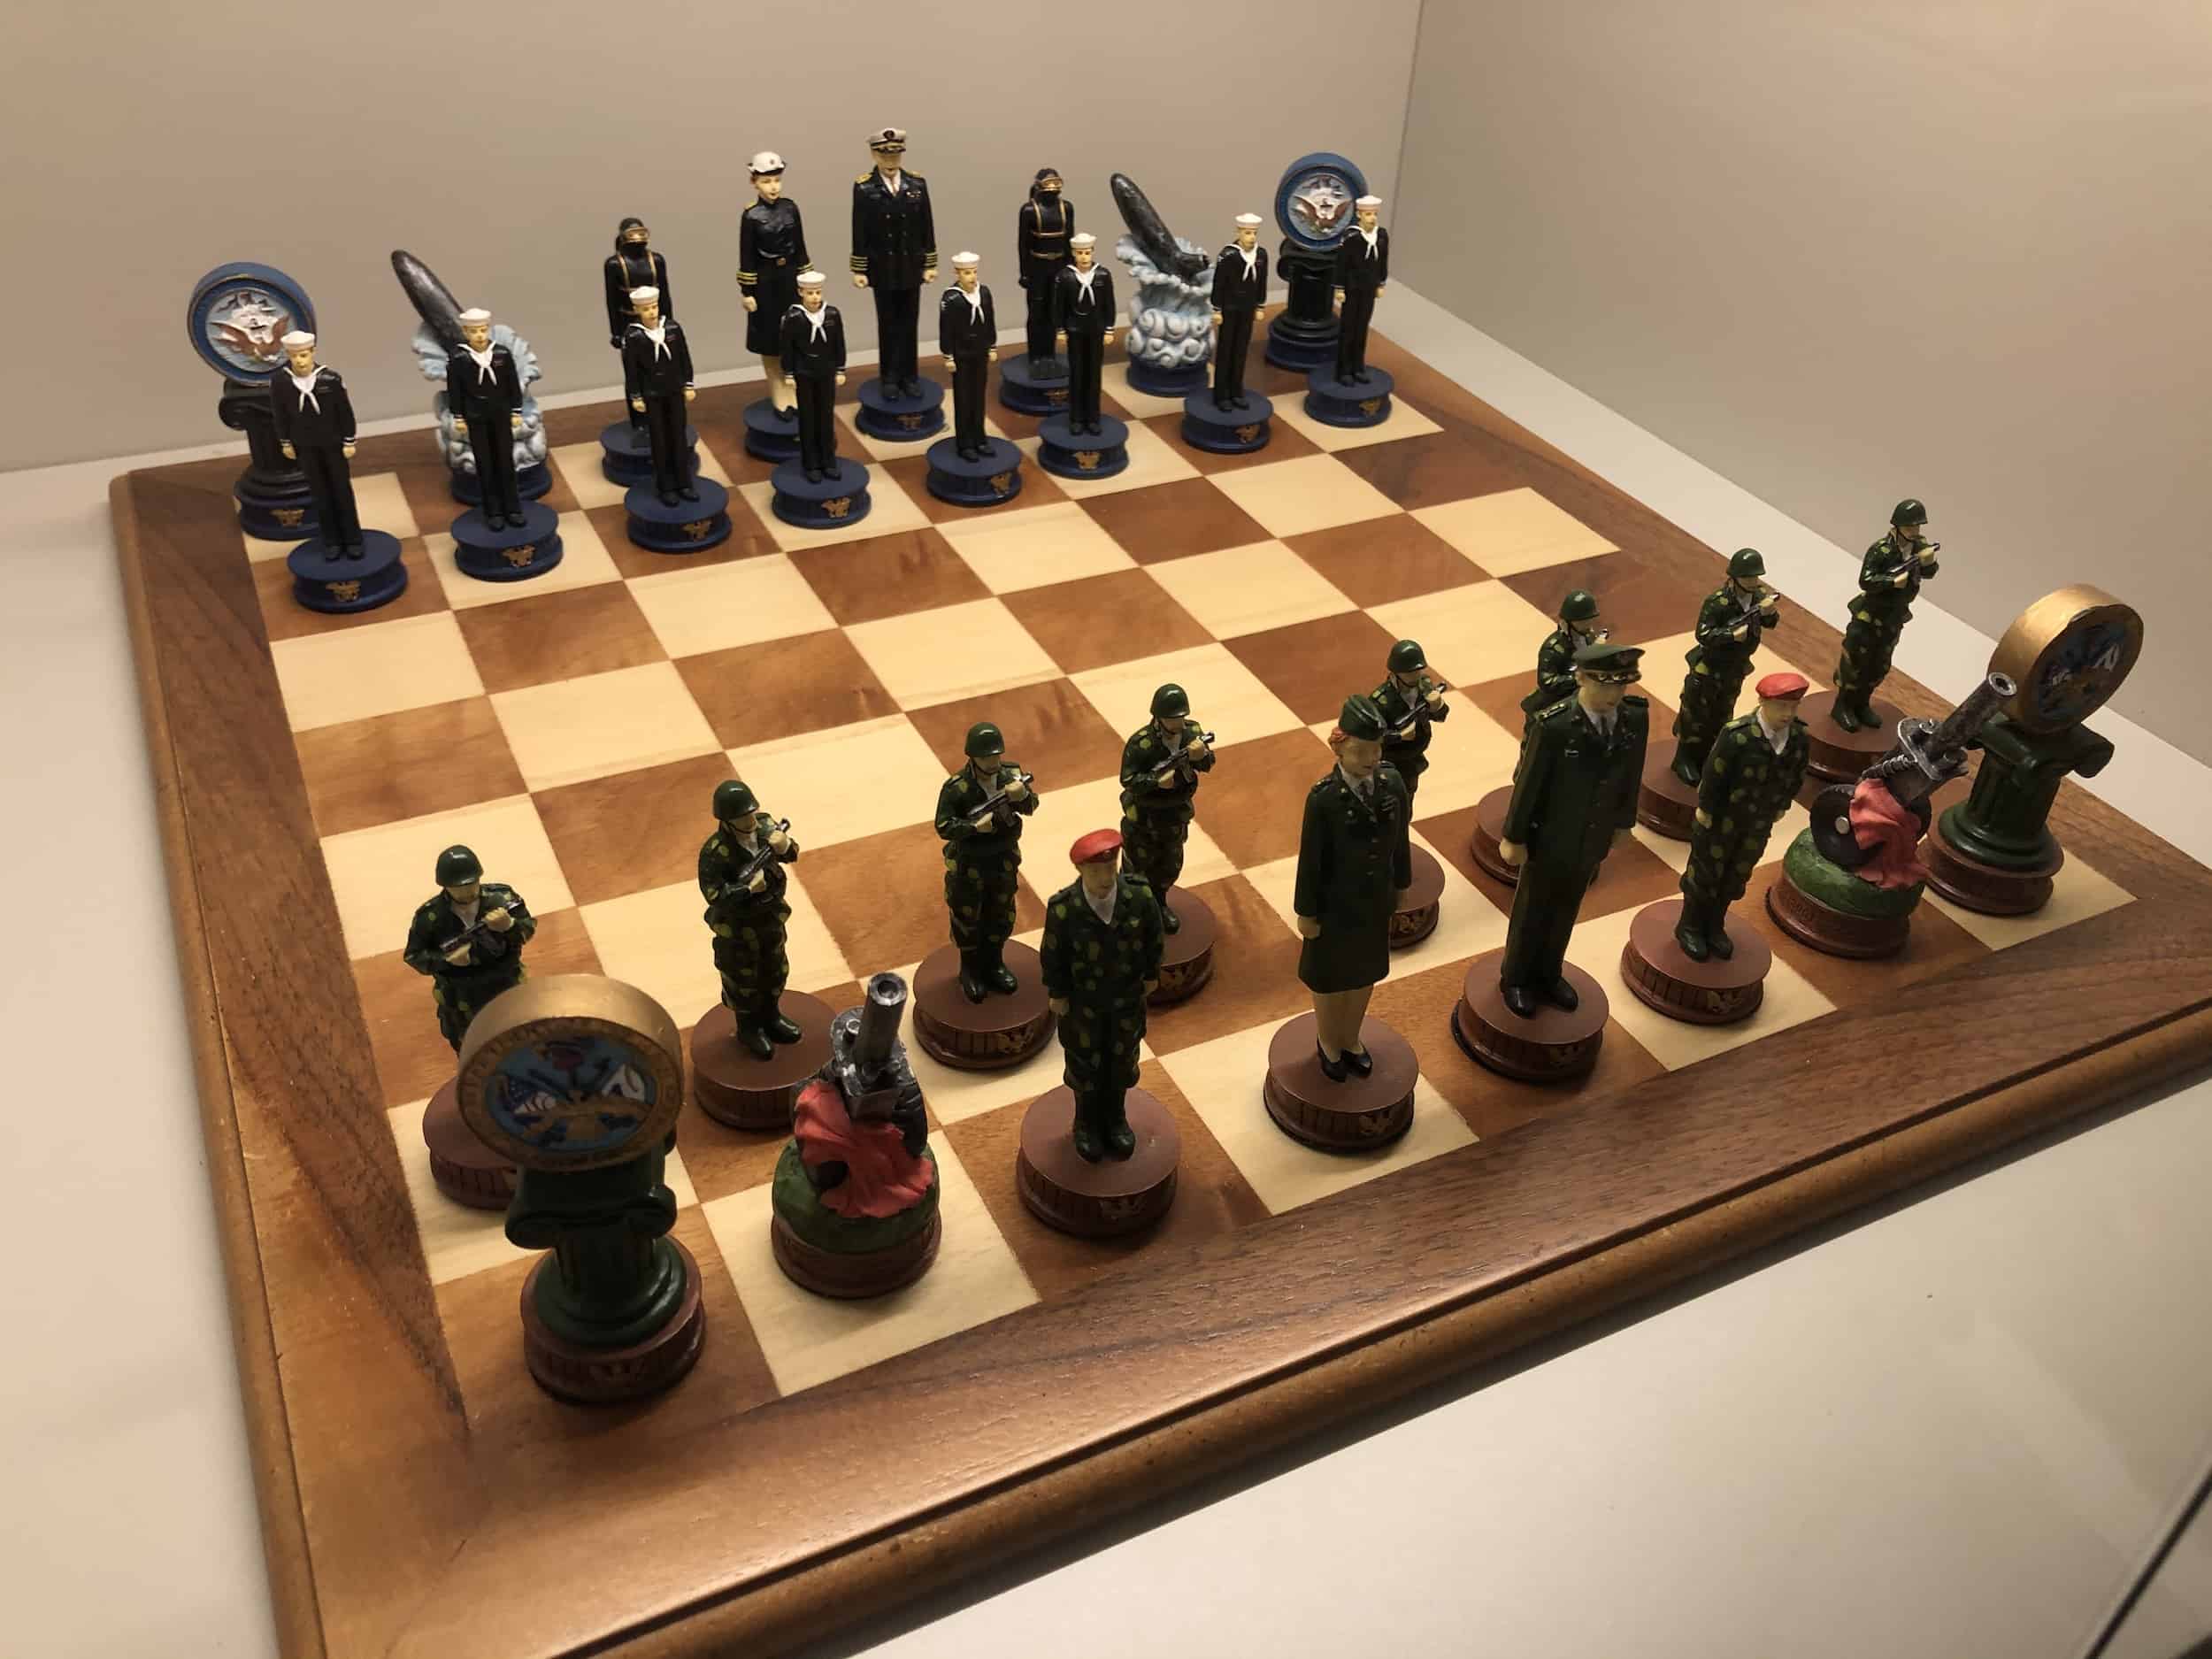 Army vs Navy chess set (USA) at the Gökyay Foundation Chess Museum in Ankara, Turkey